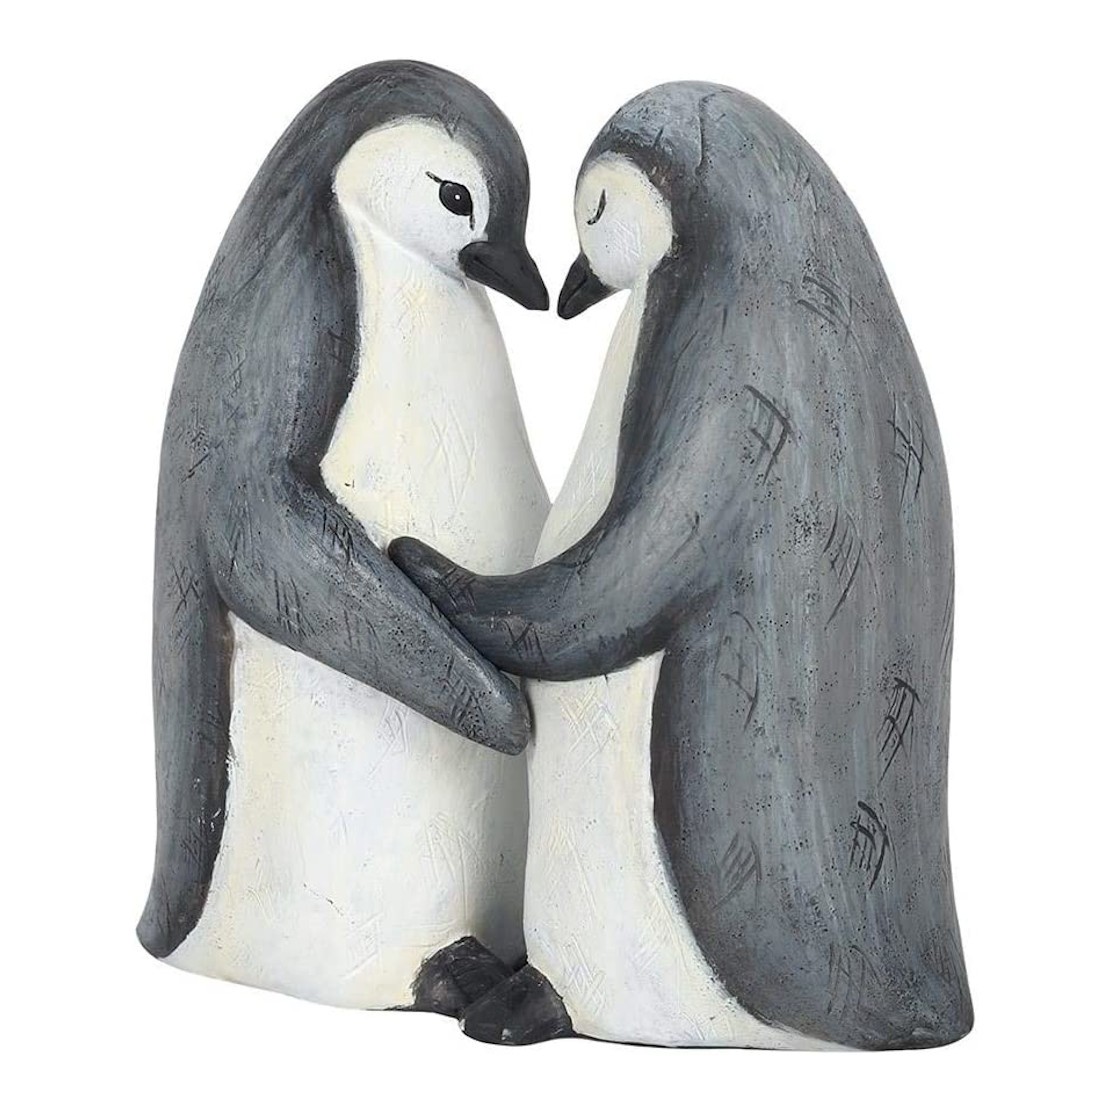 Penguin Partners for Life Ornament